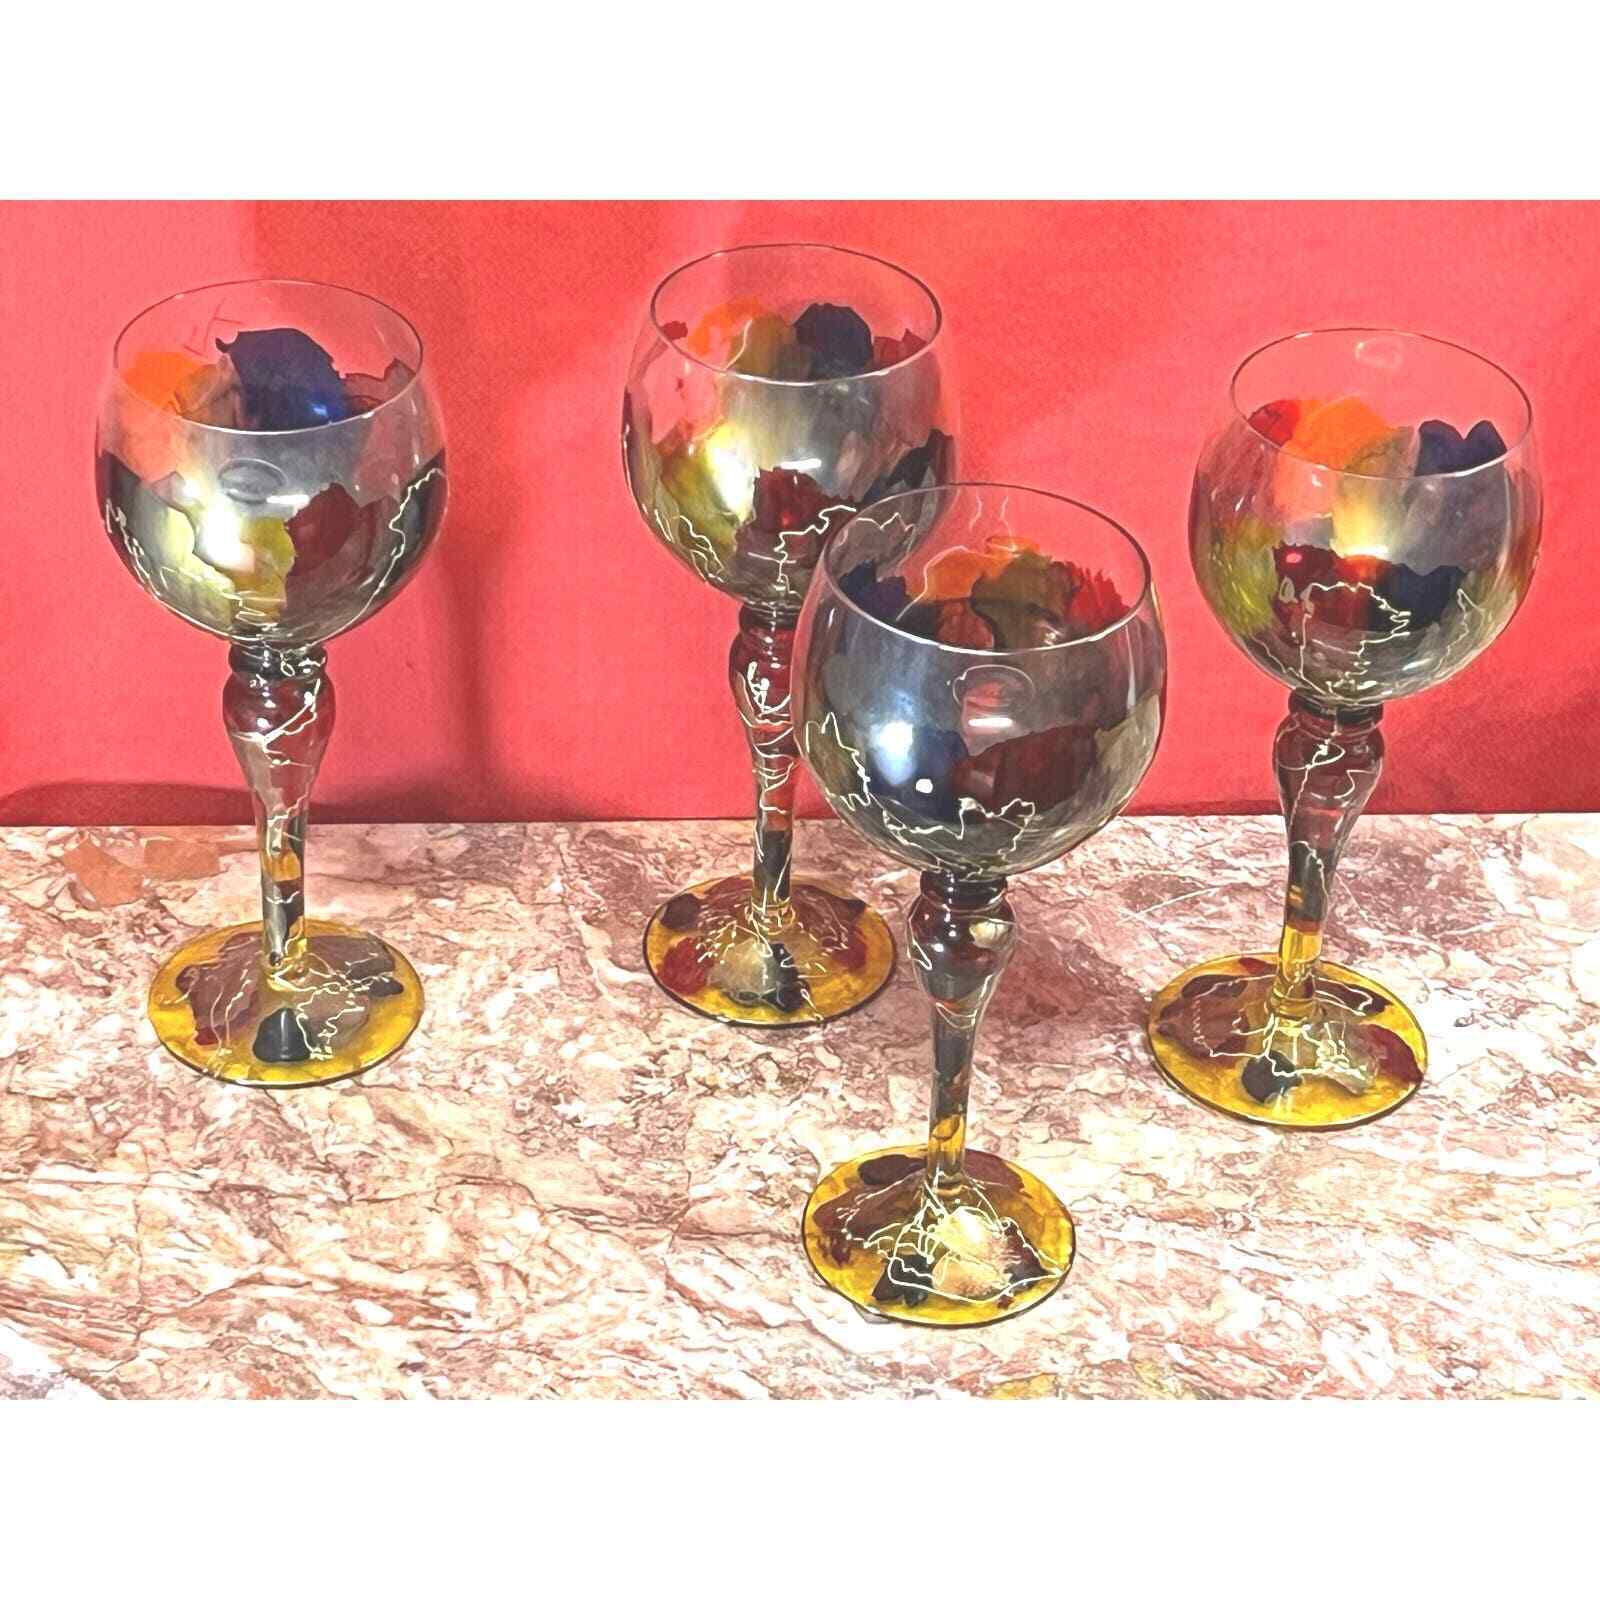  ROYAL DANUBE ROMANIAN ART GLASS   SPLATTERED GOLD ETCHED  WINE GLASS SET OF 4